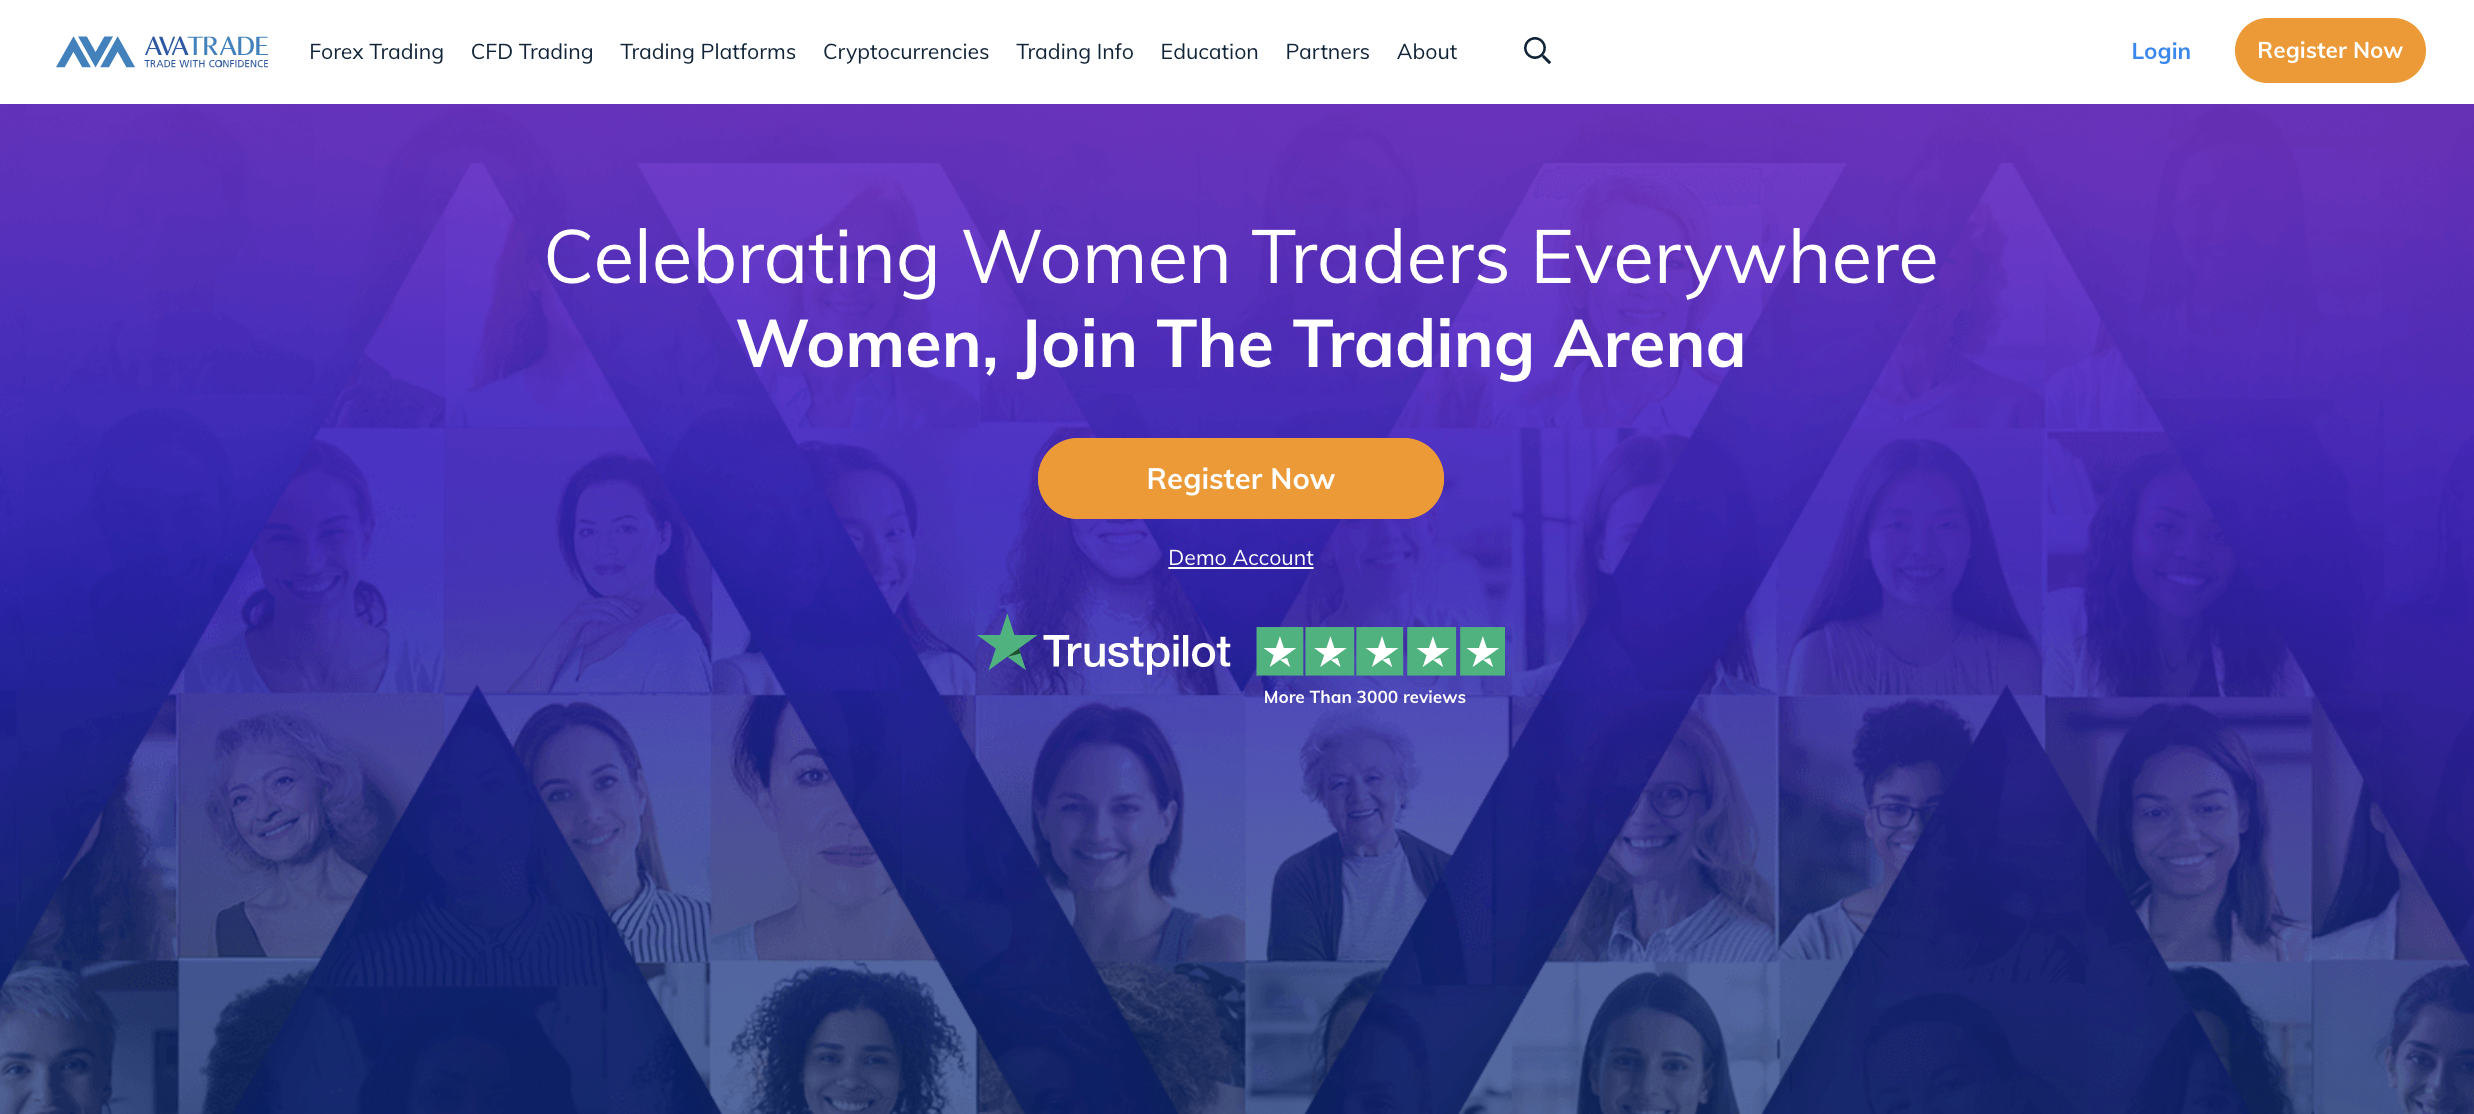 AvaTrade 공식 홈페이지. 세계 여성의 날이나 다른 축하 행사와 같이 때때로 특별 행사가 있습니다.